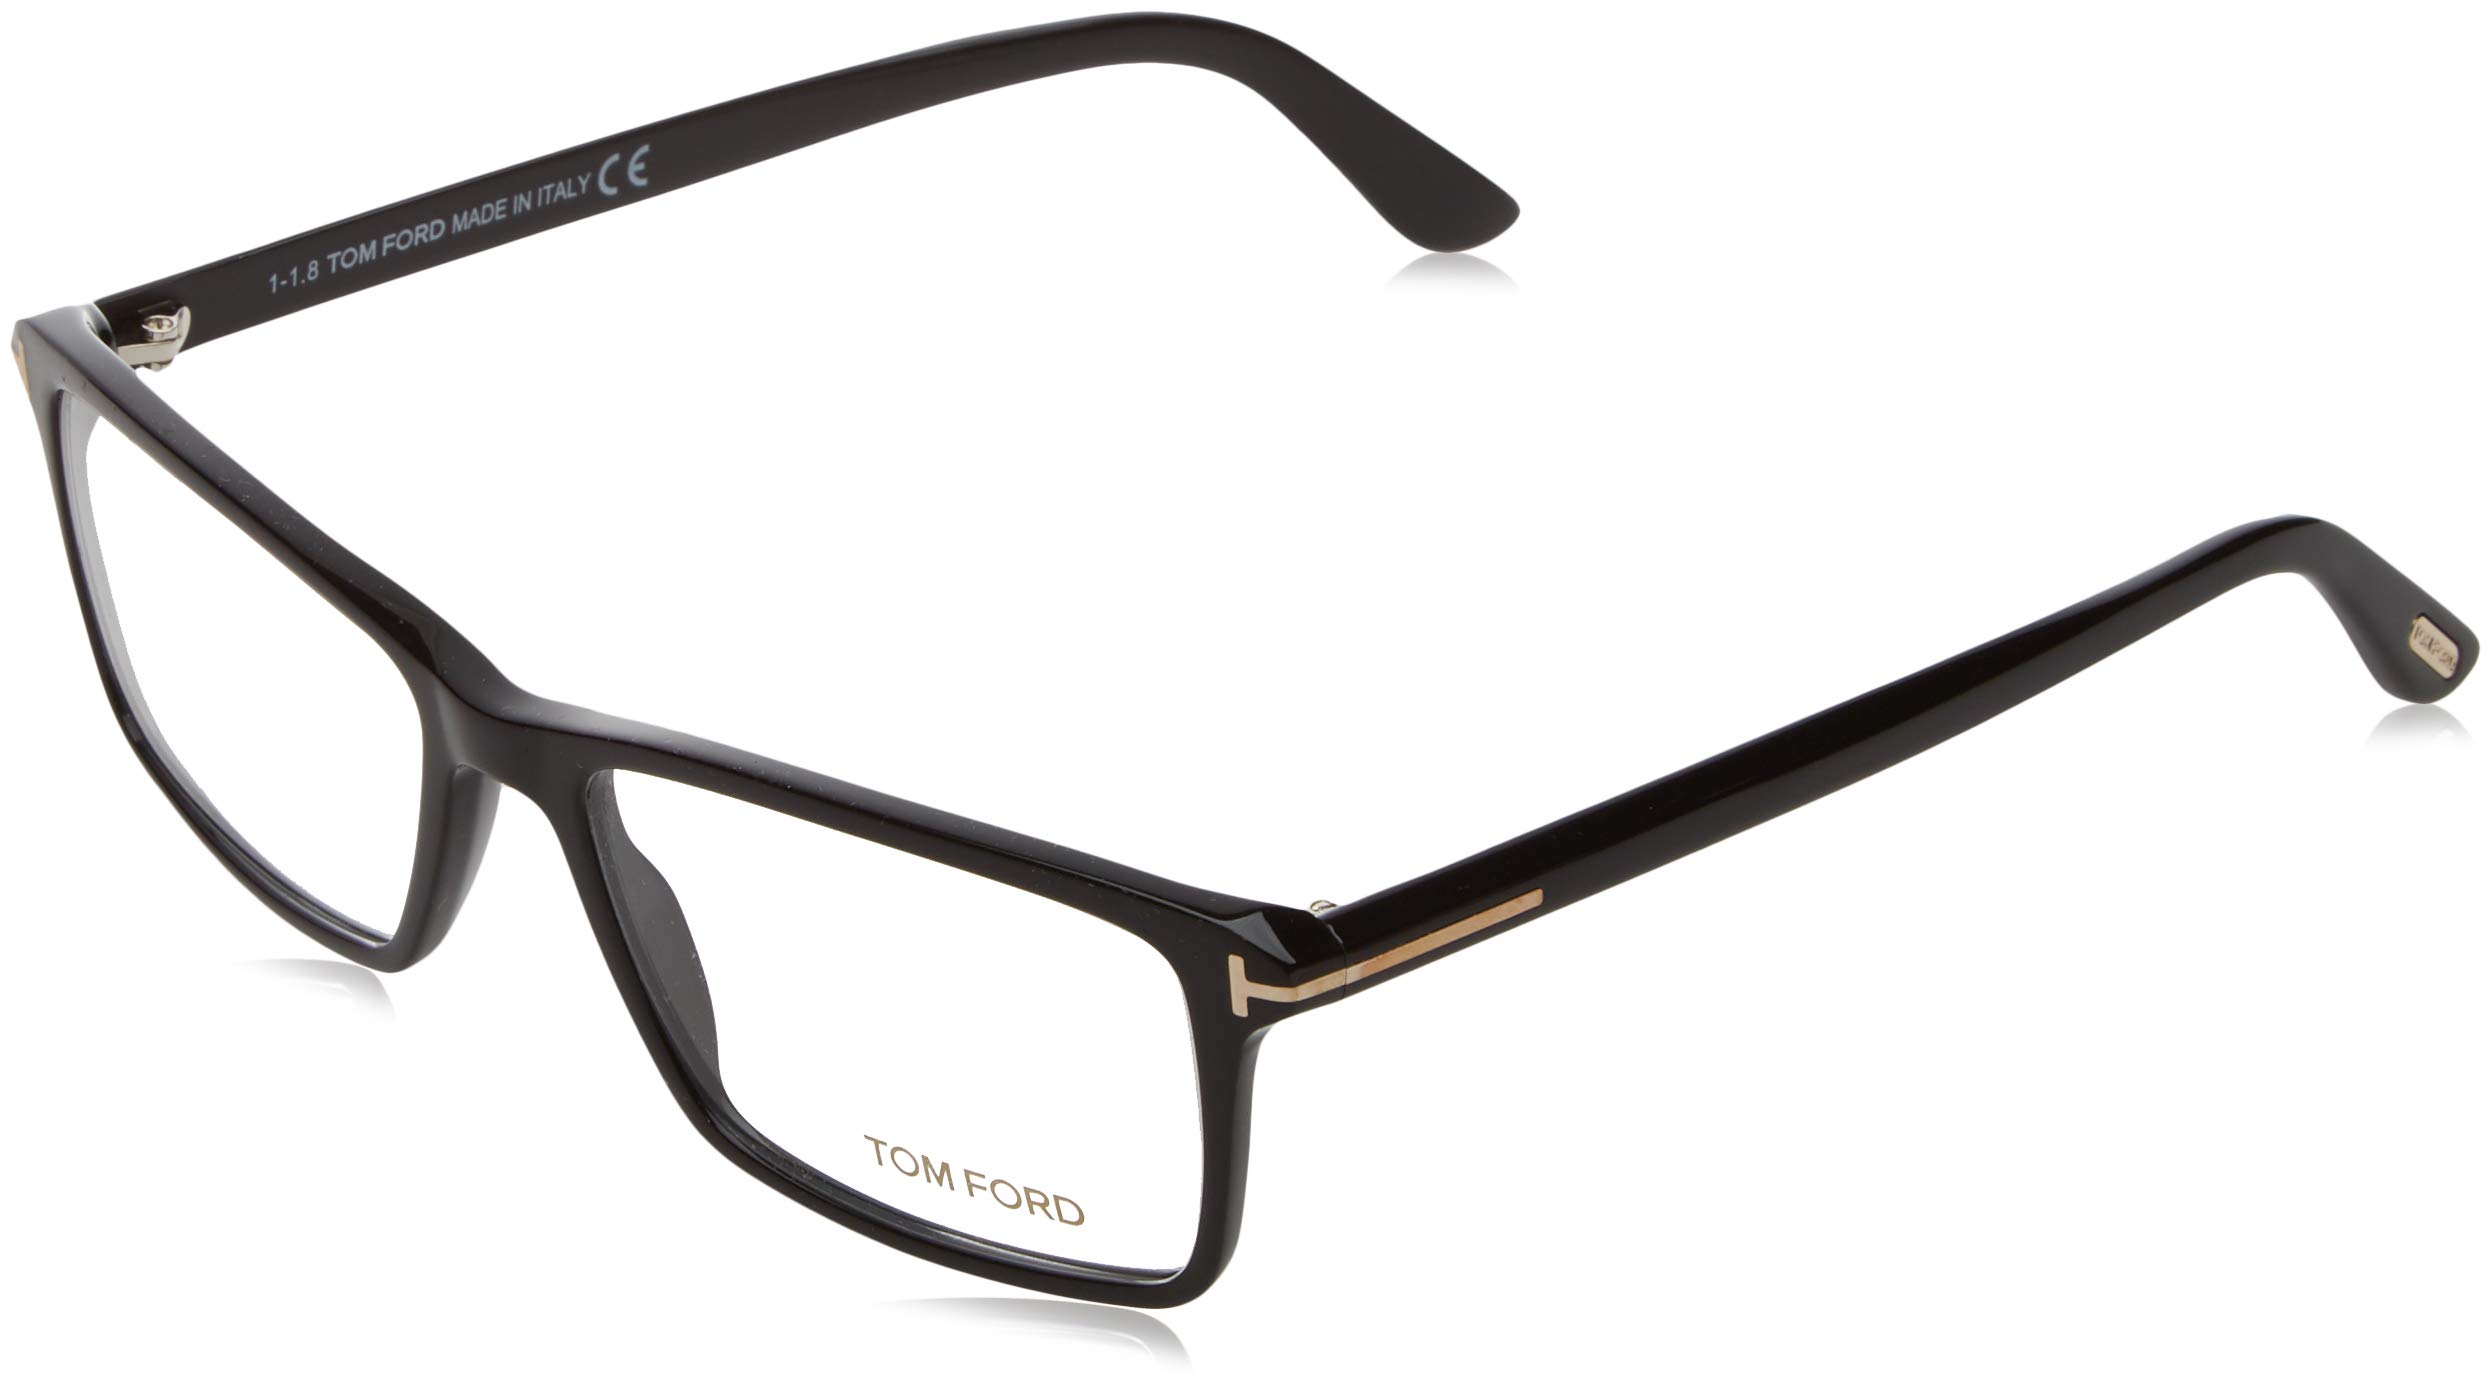 Actualizar 48+ imagen tom ford men’s eyeglass frames